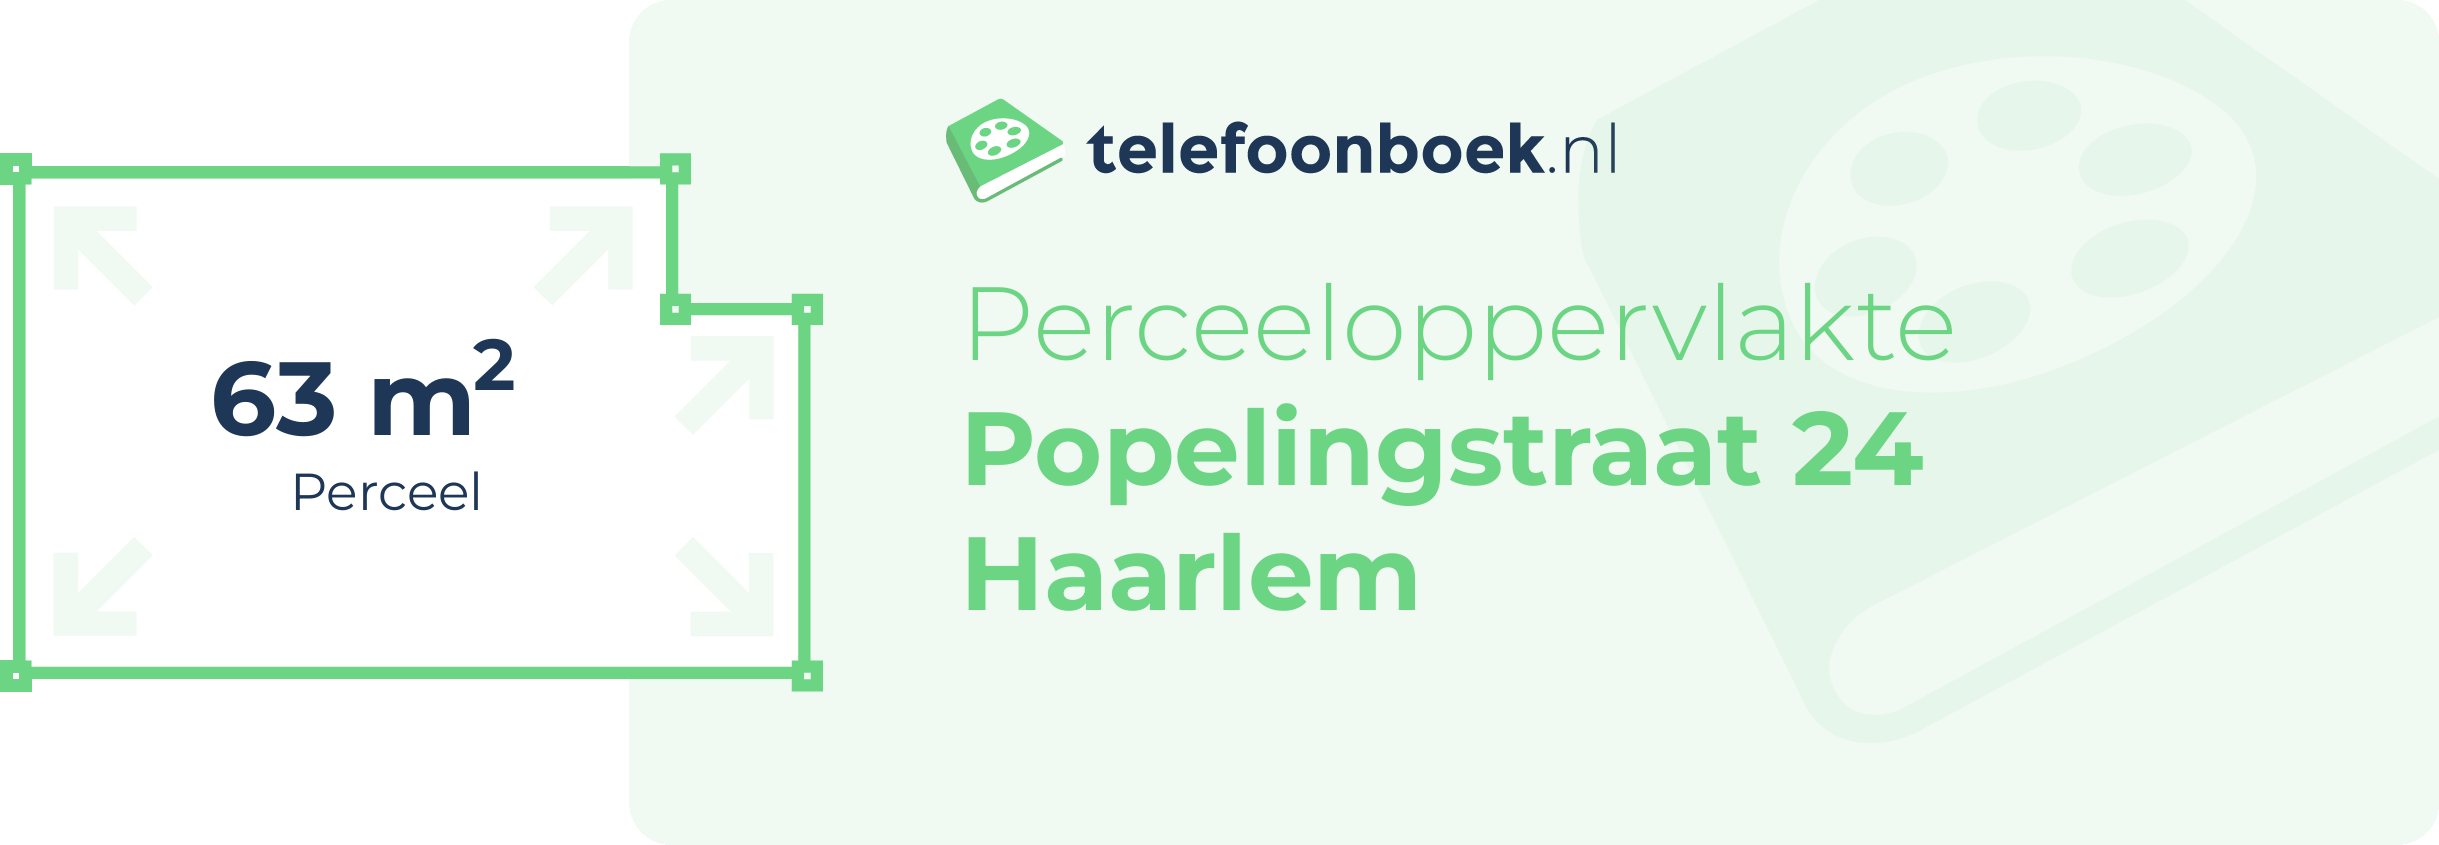 Perceeloppervlakte Popelingstraat 24 Haarlem